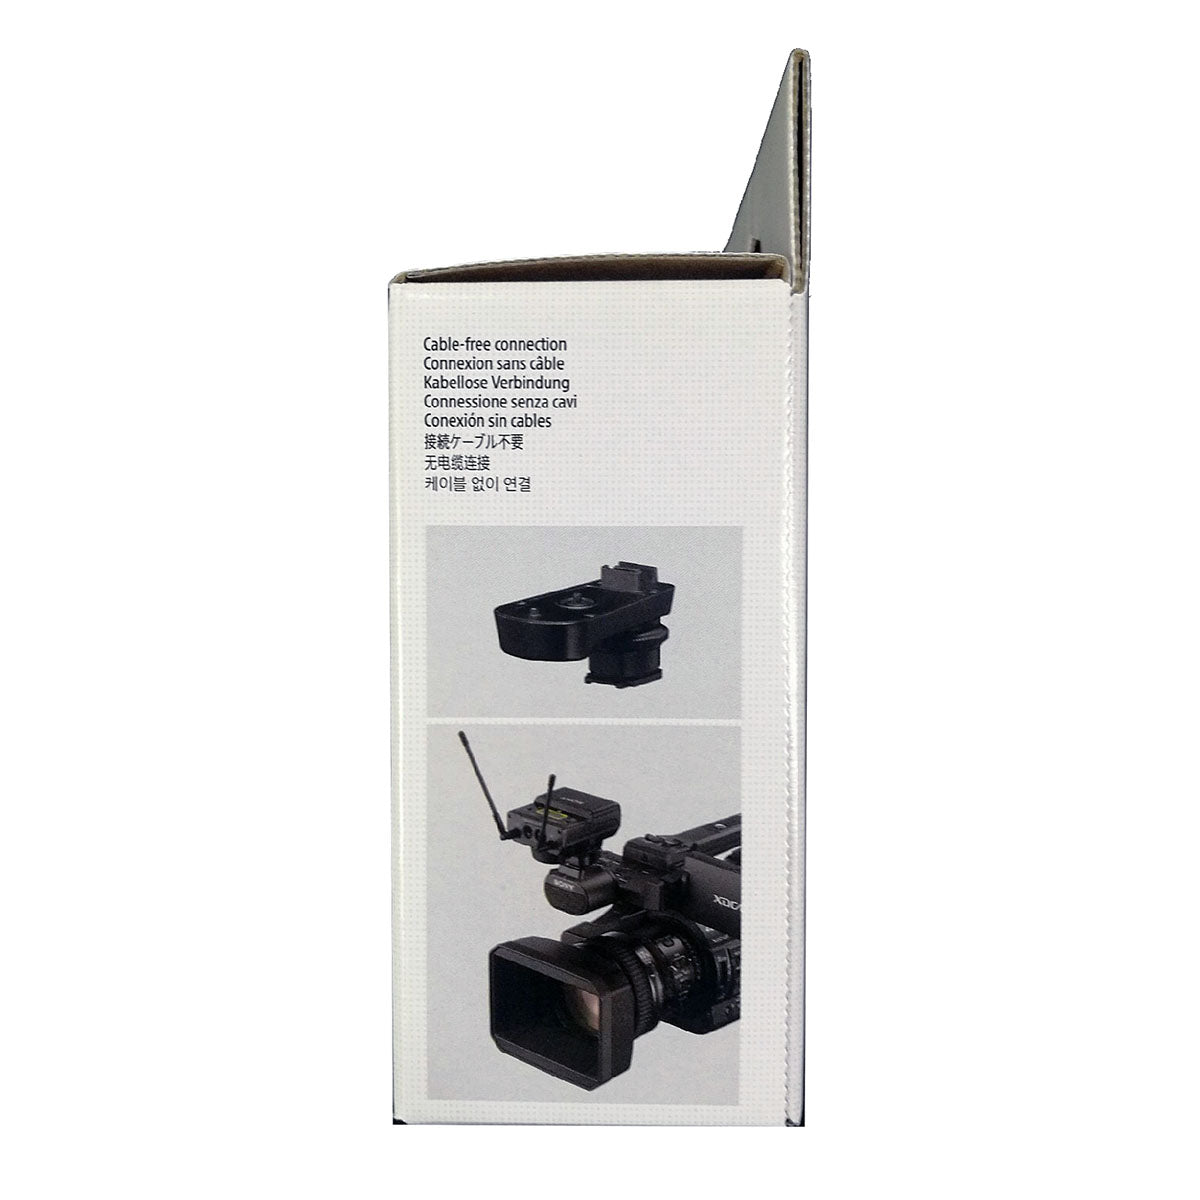 SMAD-P5 MI Multi Interface Shoe Mount Adaptor For Sony URX-P40